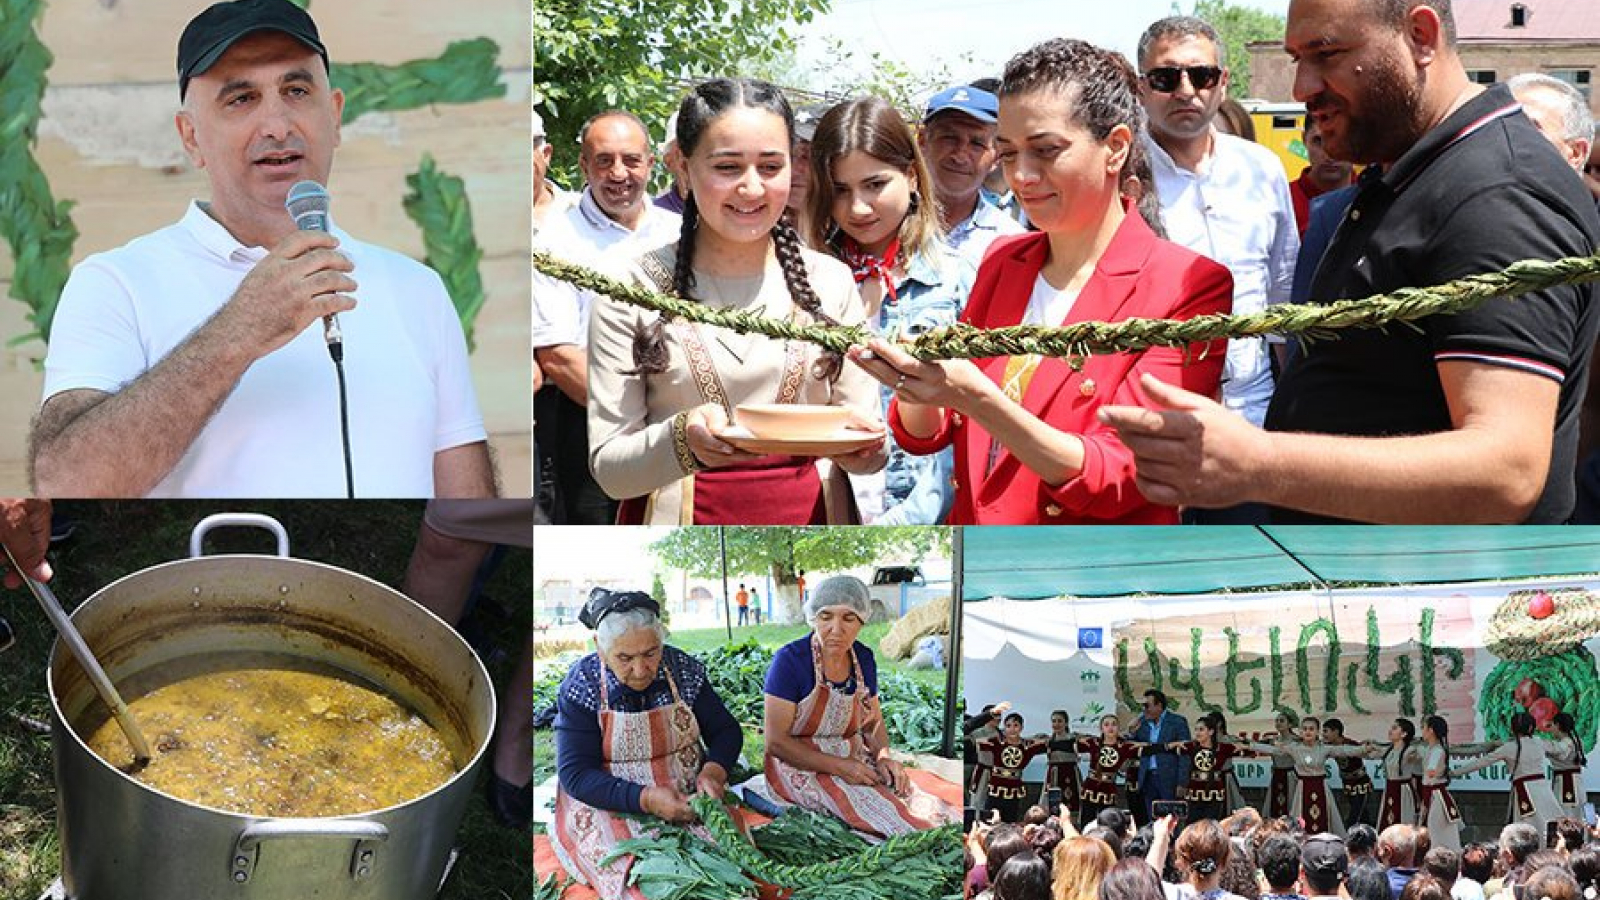 World’s longest sorrel braid made at EU-supported festival in Armenia